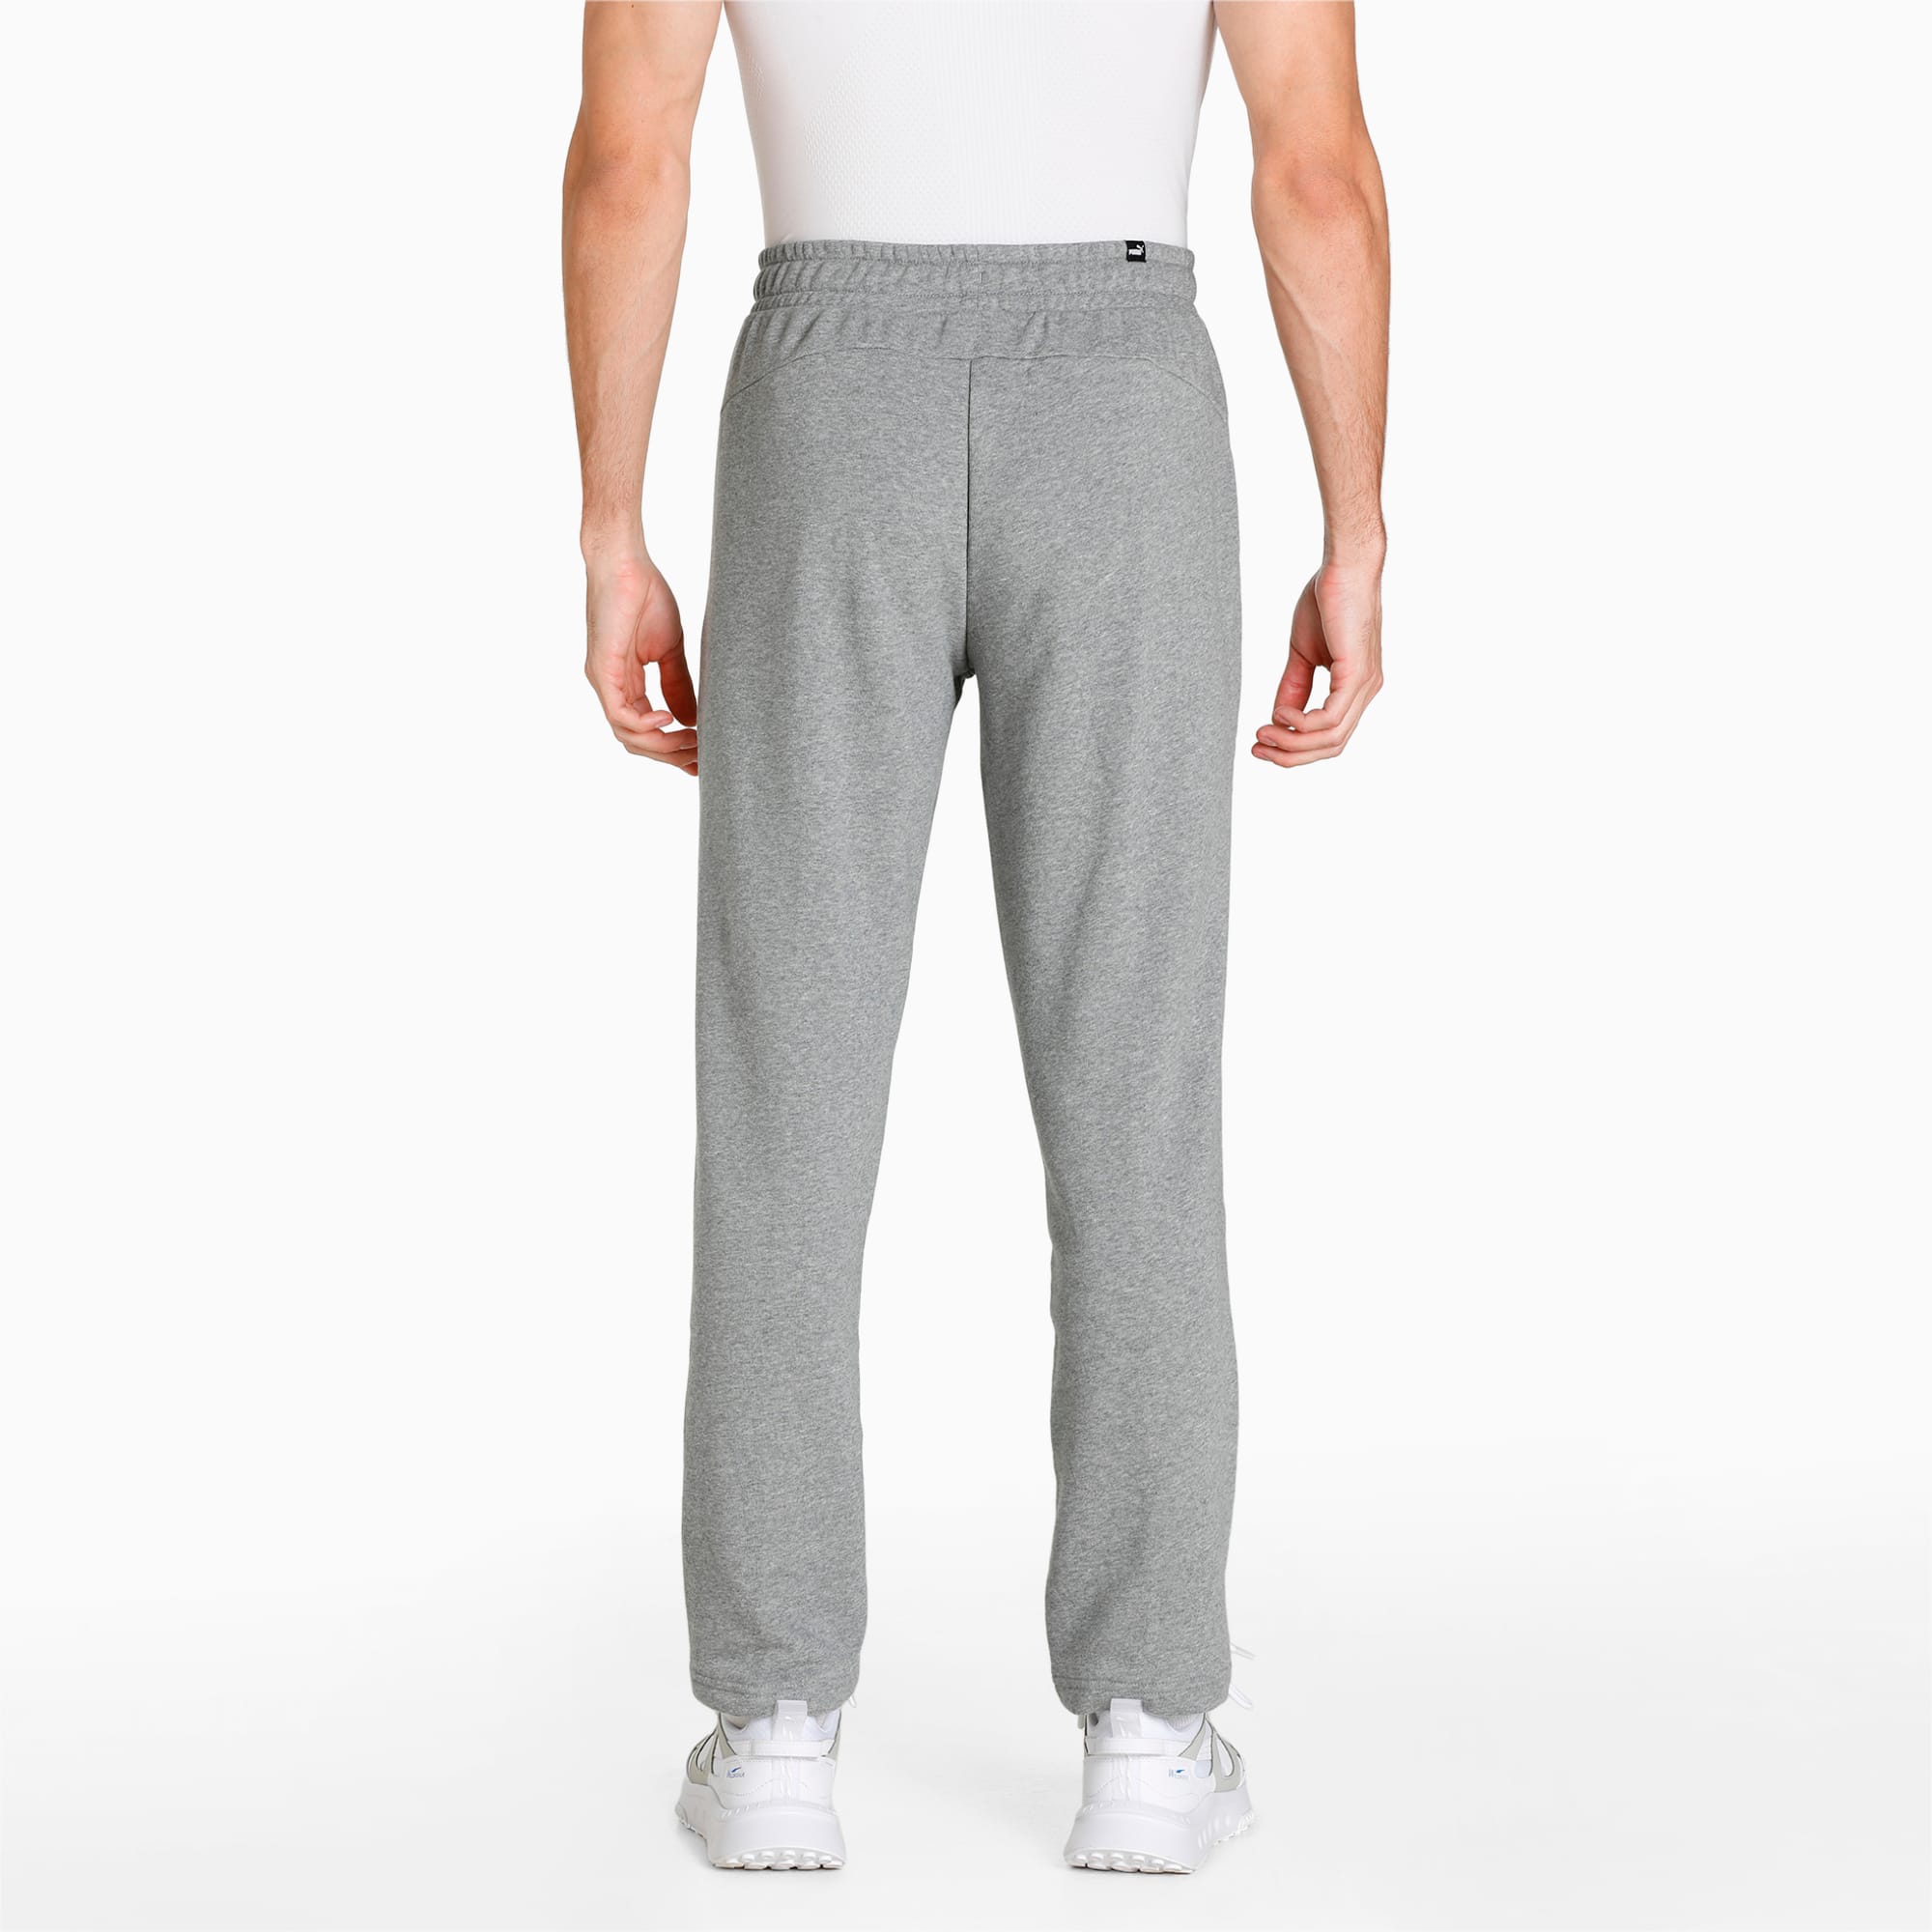 PUMA Essentials Logo Men's Sweatpants, Medium Grey Heather, Size S, Clothing